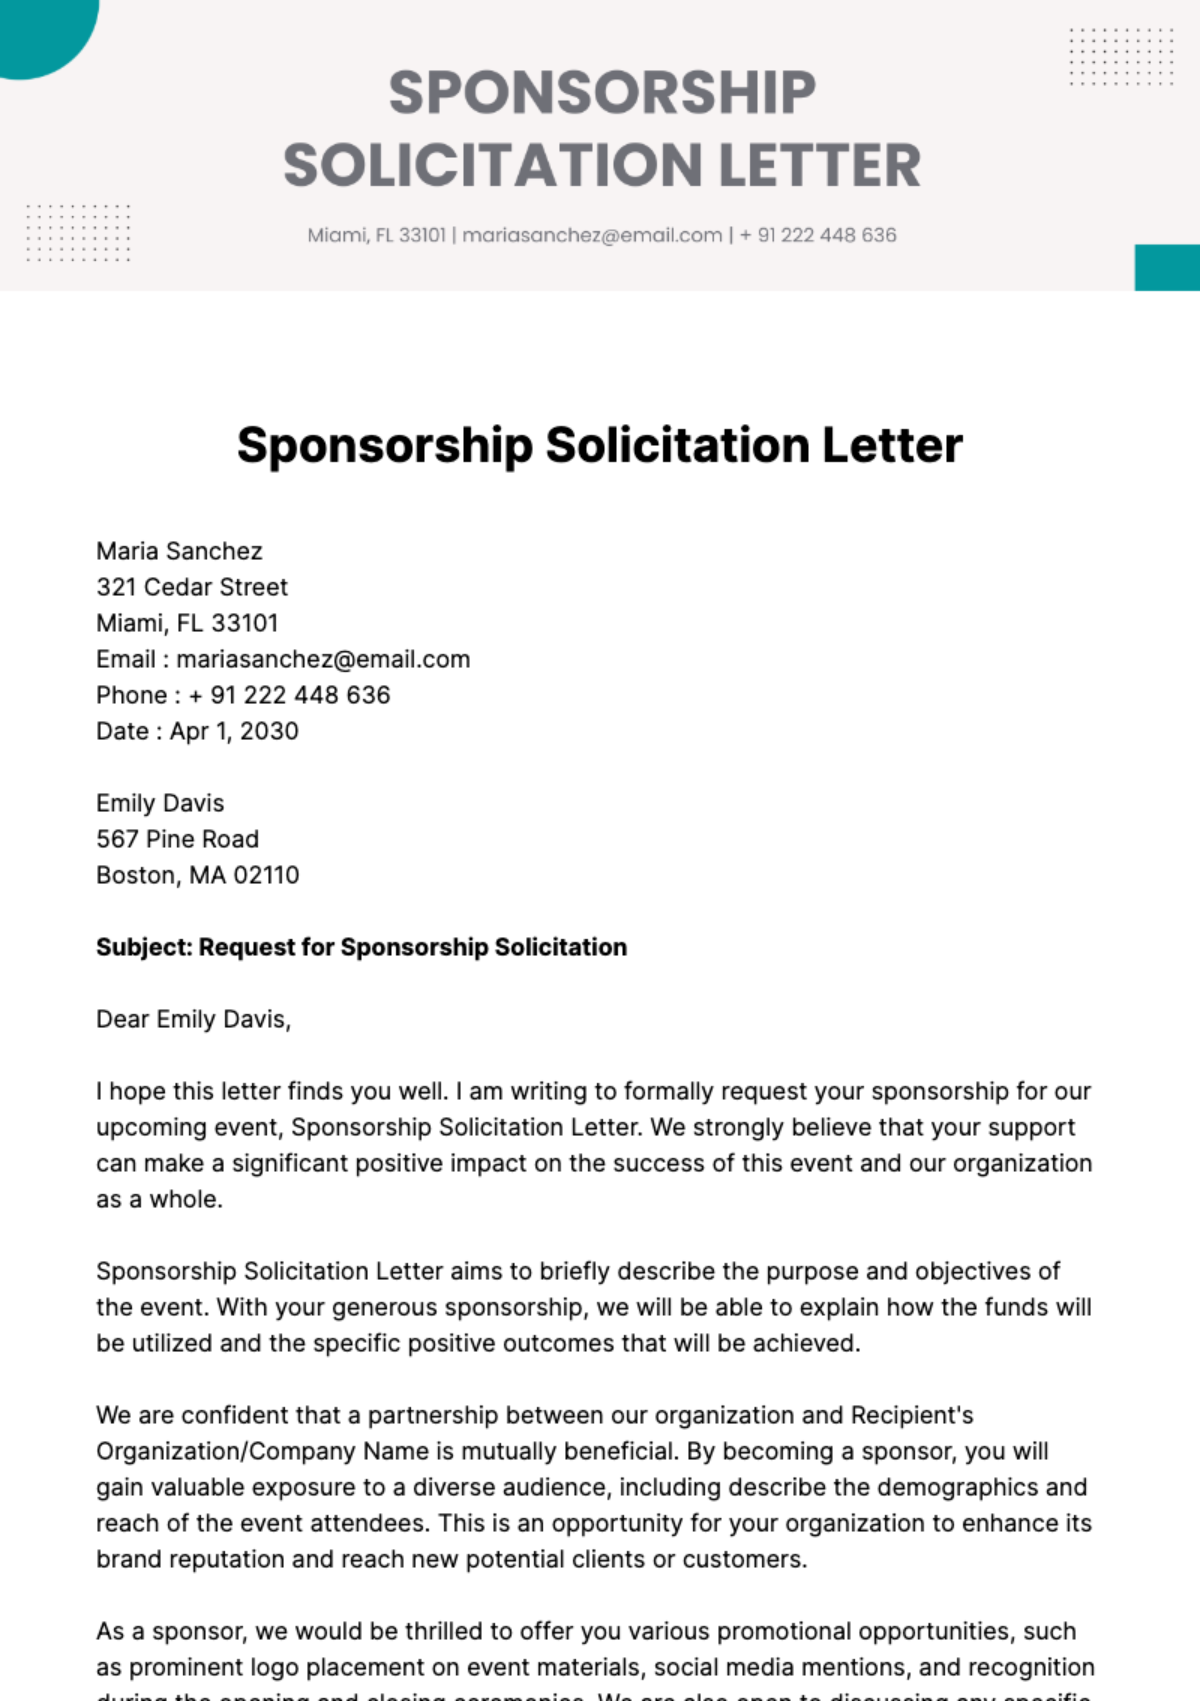 Free Sponsorship Solicitation Letter Template